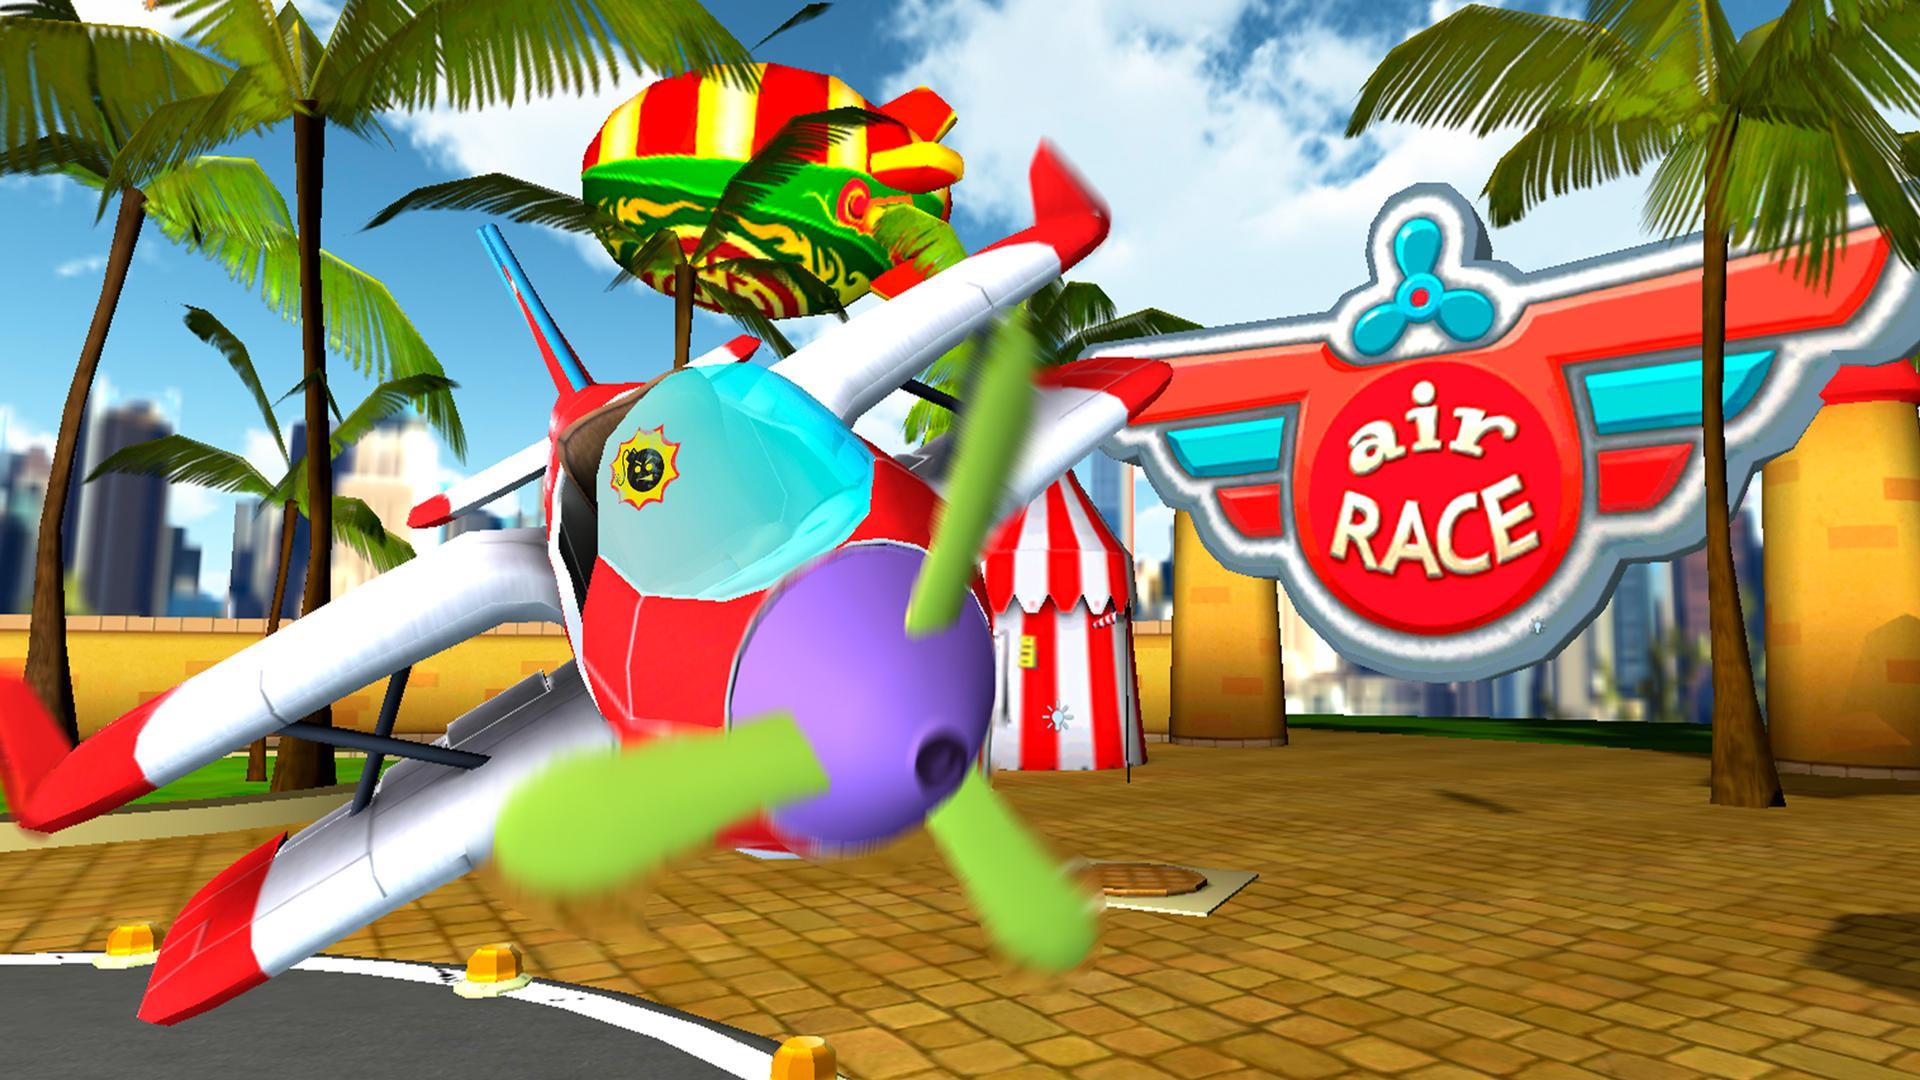 Air vr. Воздушные гонки игра. VR Air Race. Игра воздушные гонки для дыхания. Air Race Gameplay.